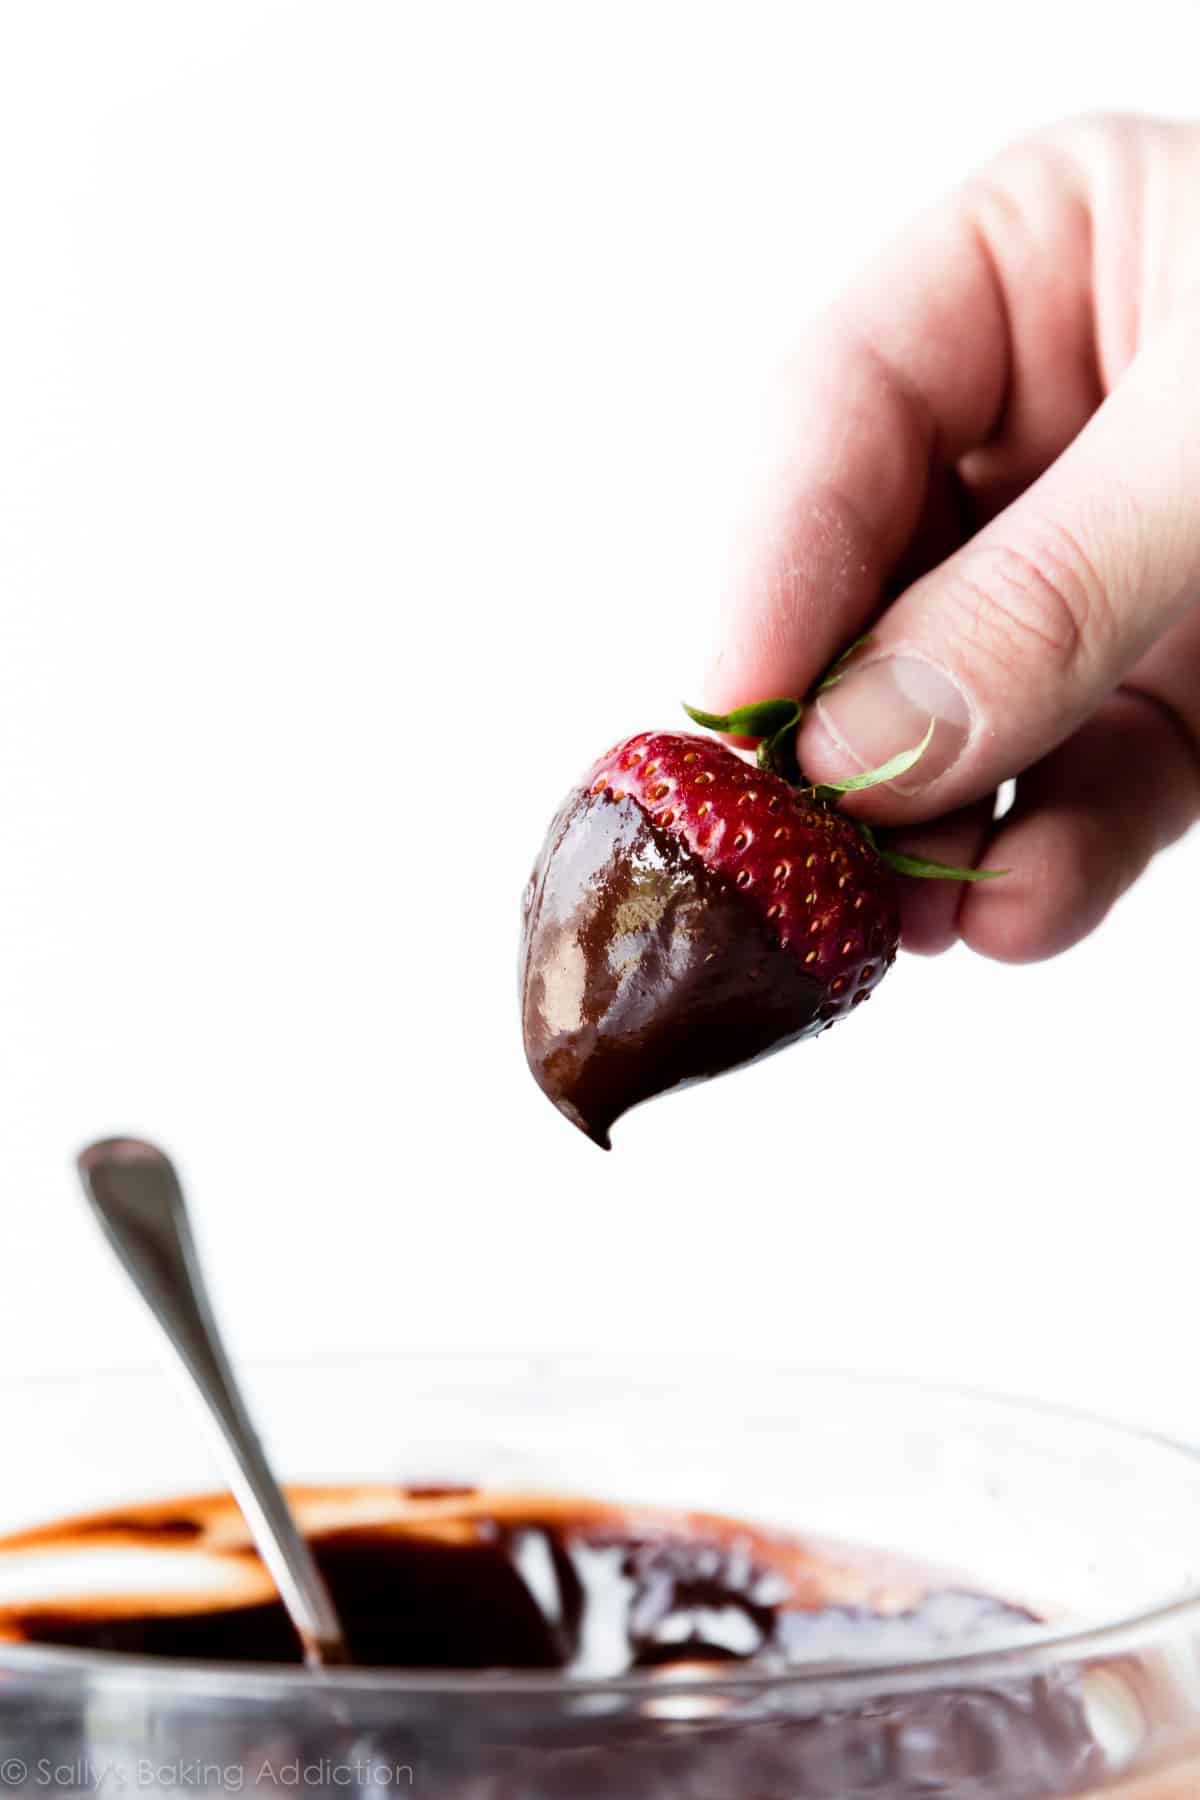 strawberry dipped in chocolate ganache